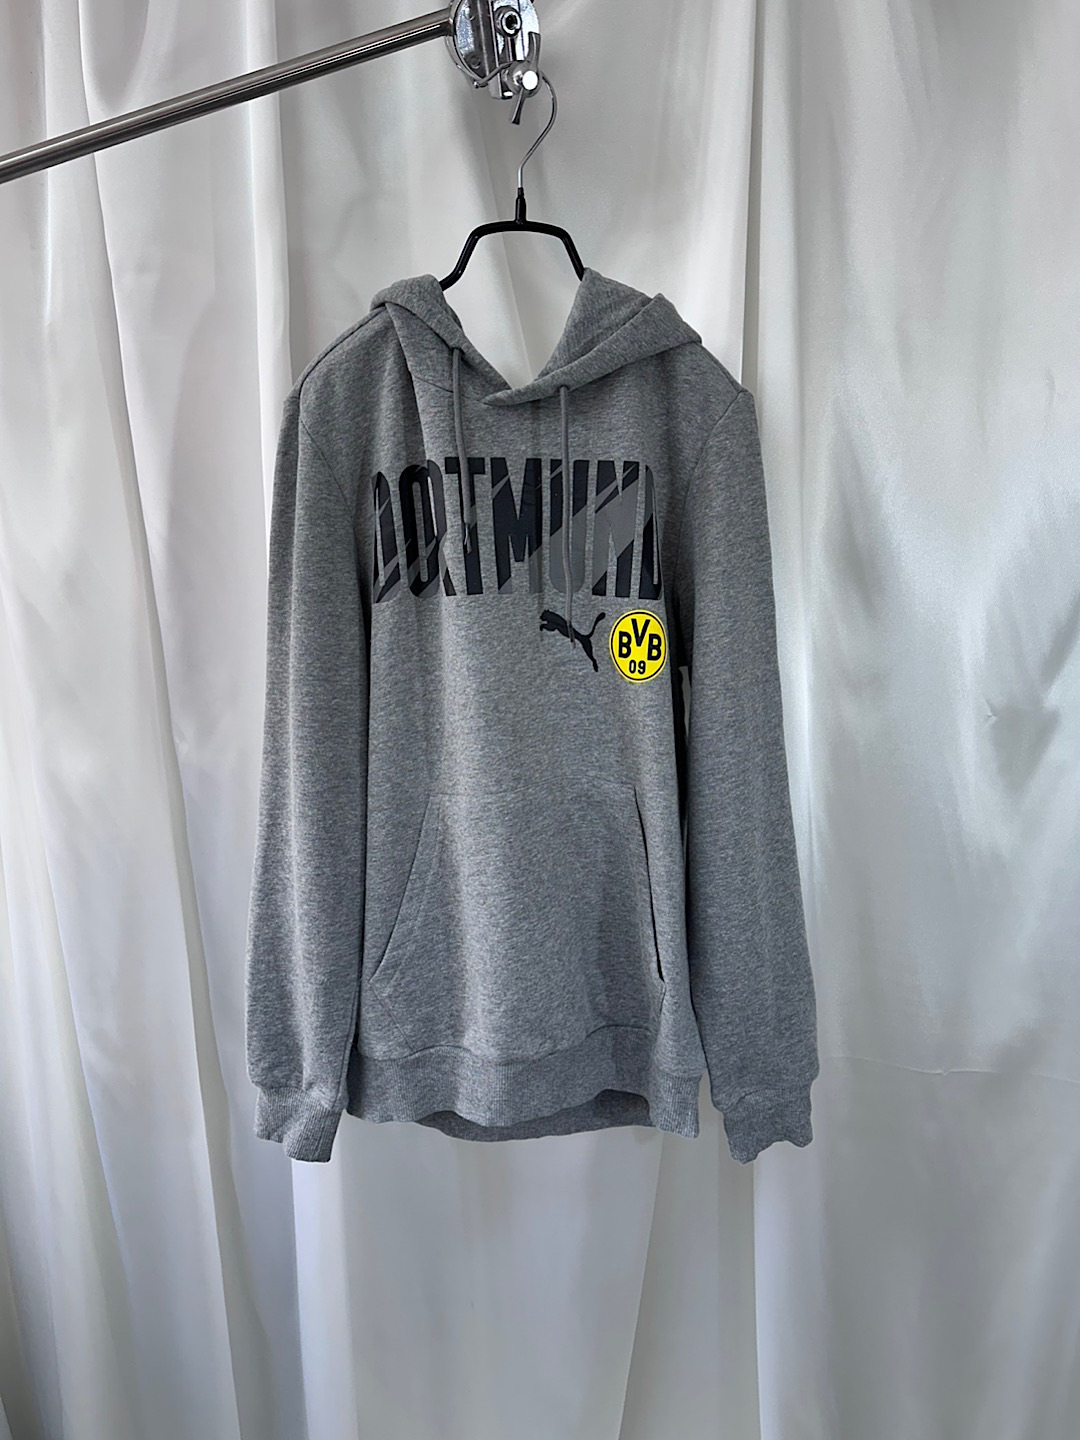 Borussia Dortmund by Puma hoodie